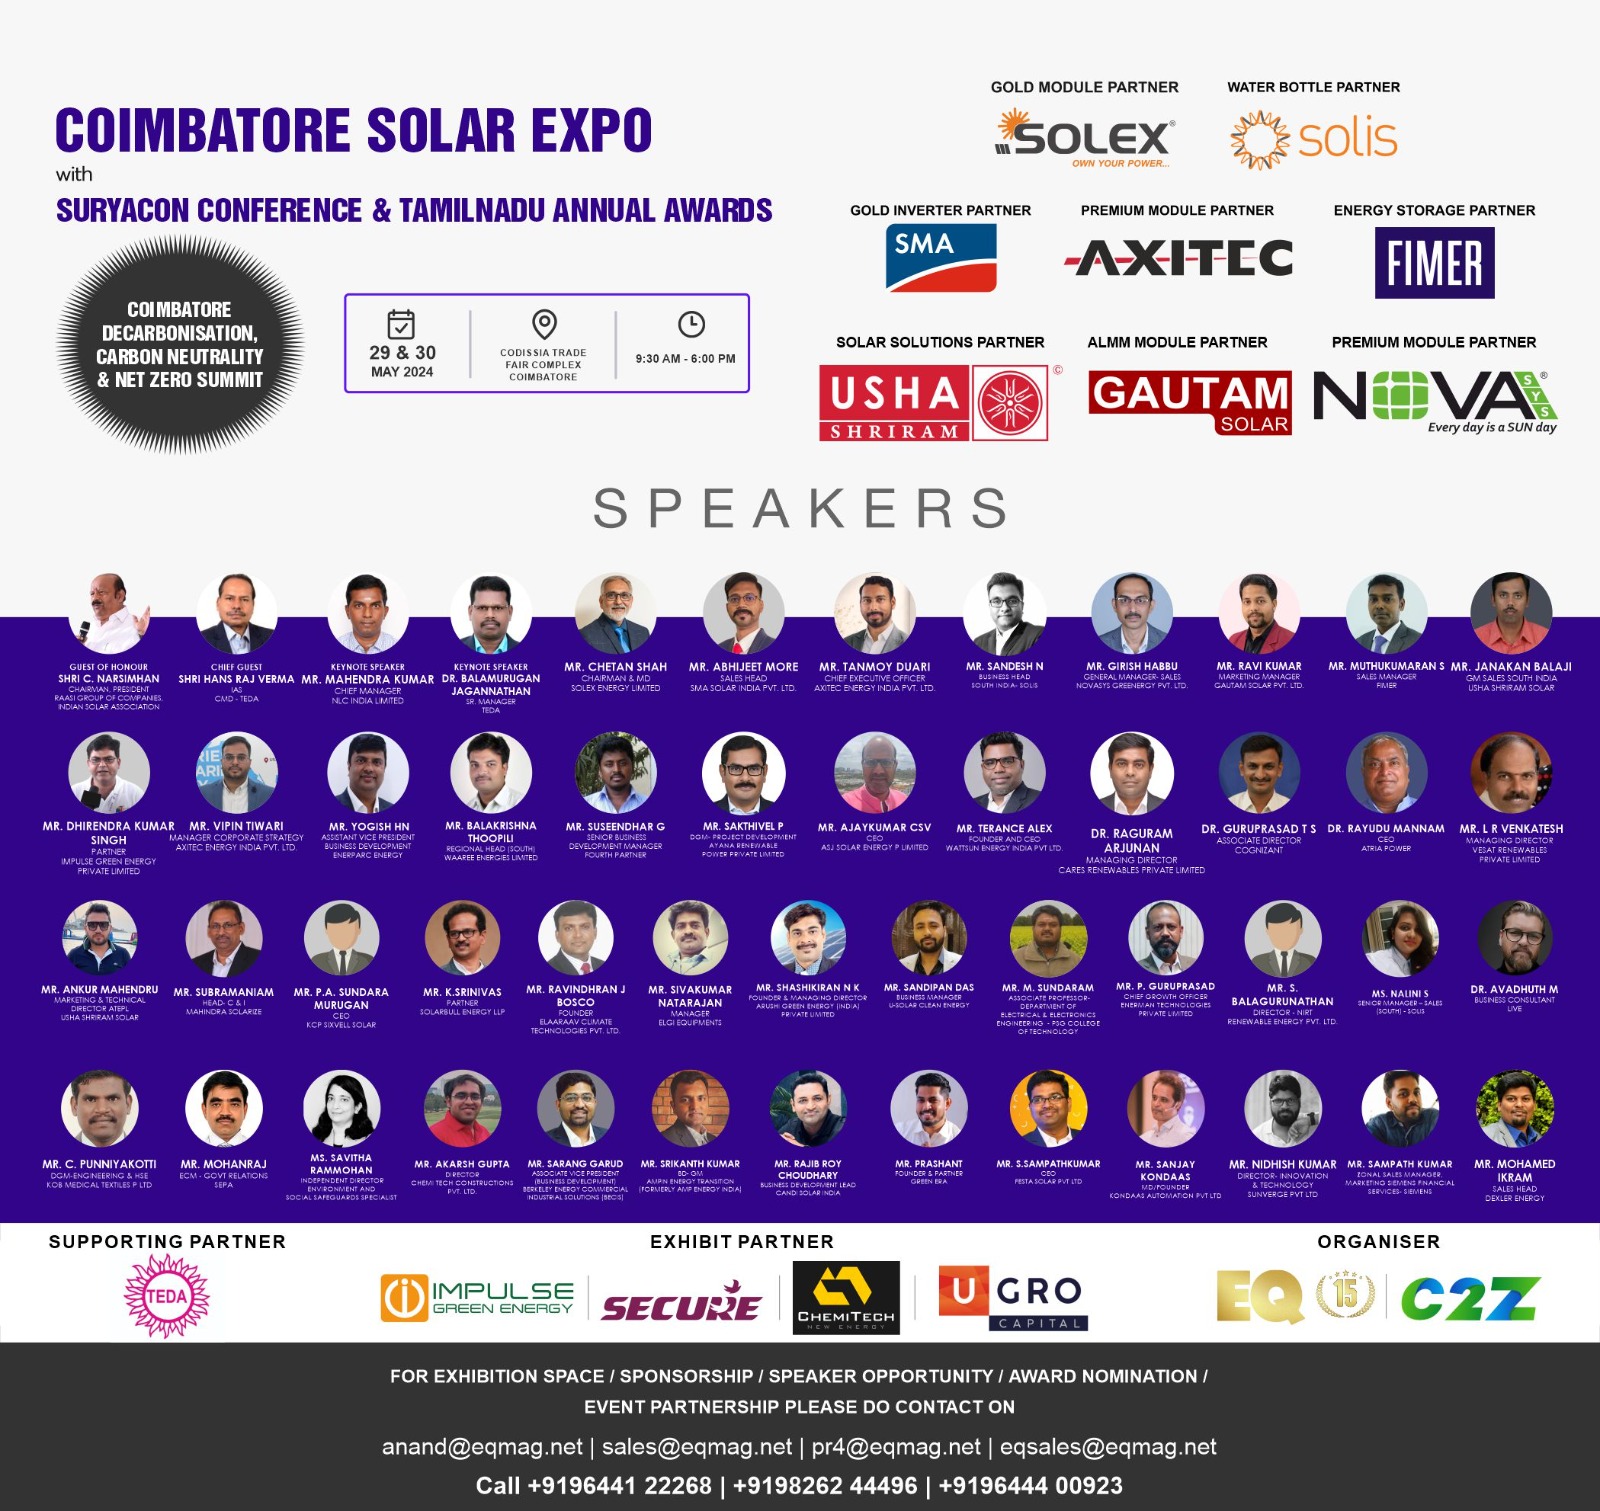 Coimbatore Solar & EV Expo + SuryaCon Conference Coimbatore + Annual Awards May 2024 + Coimbatore DeCarbonisation, Carbon Neutrality & Net Zero Summit